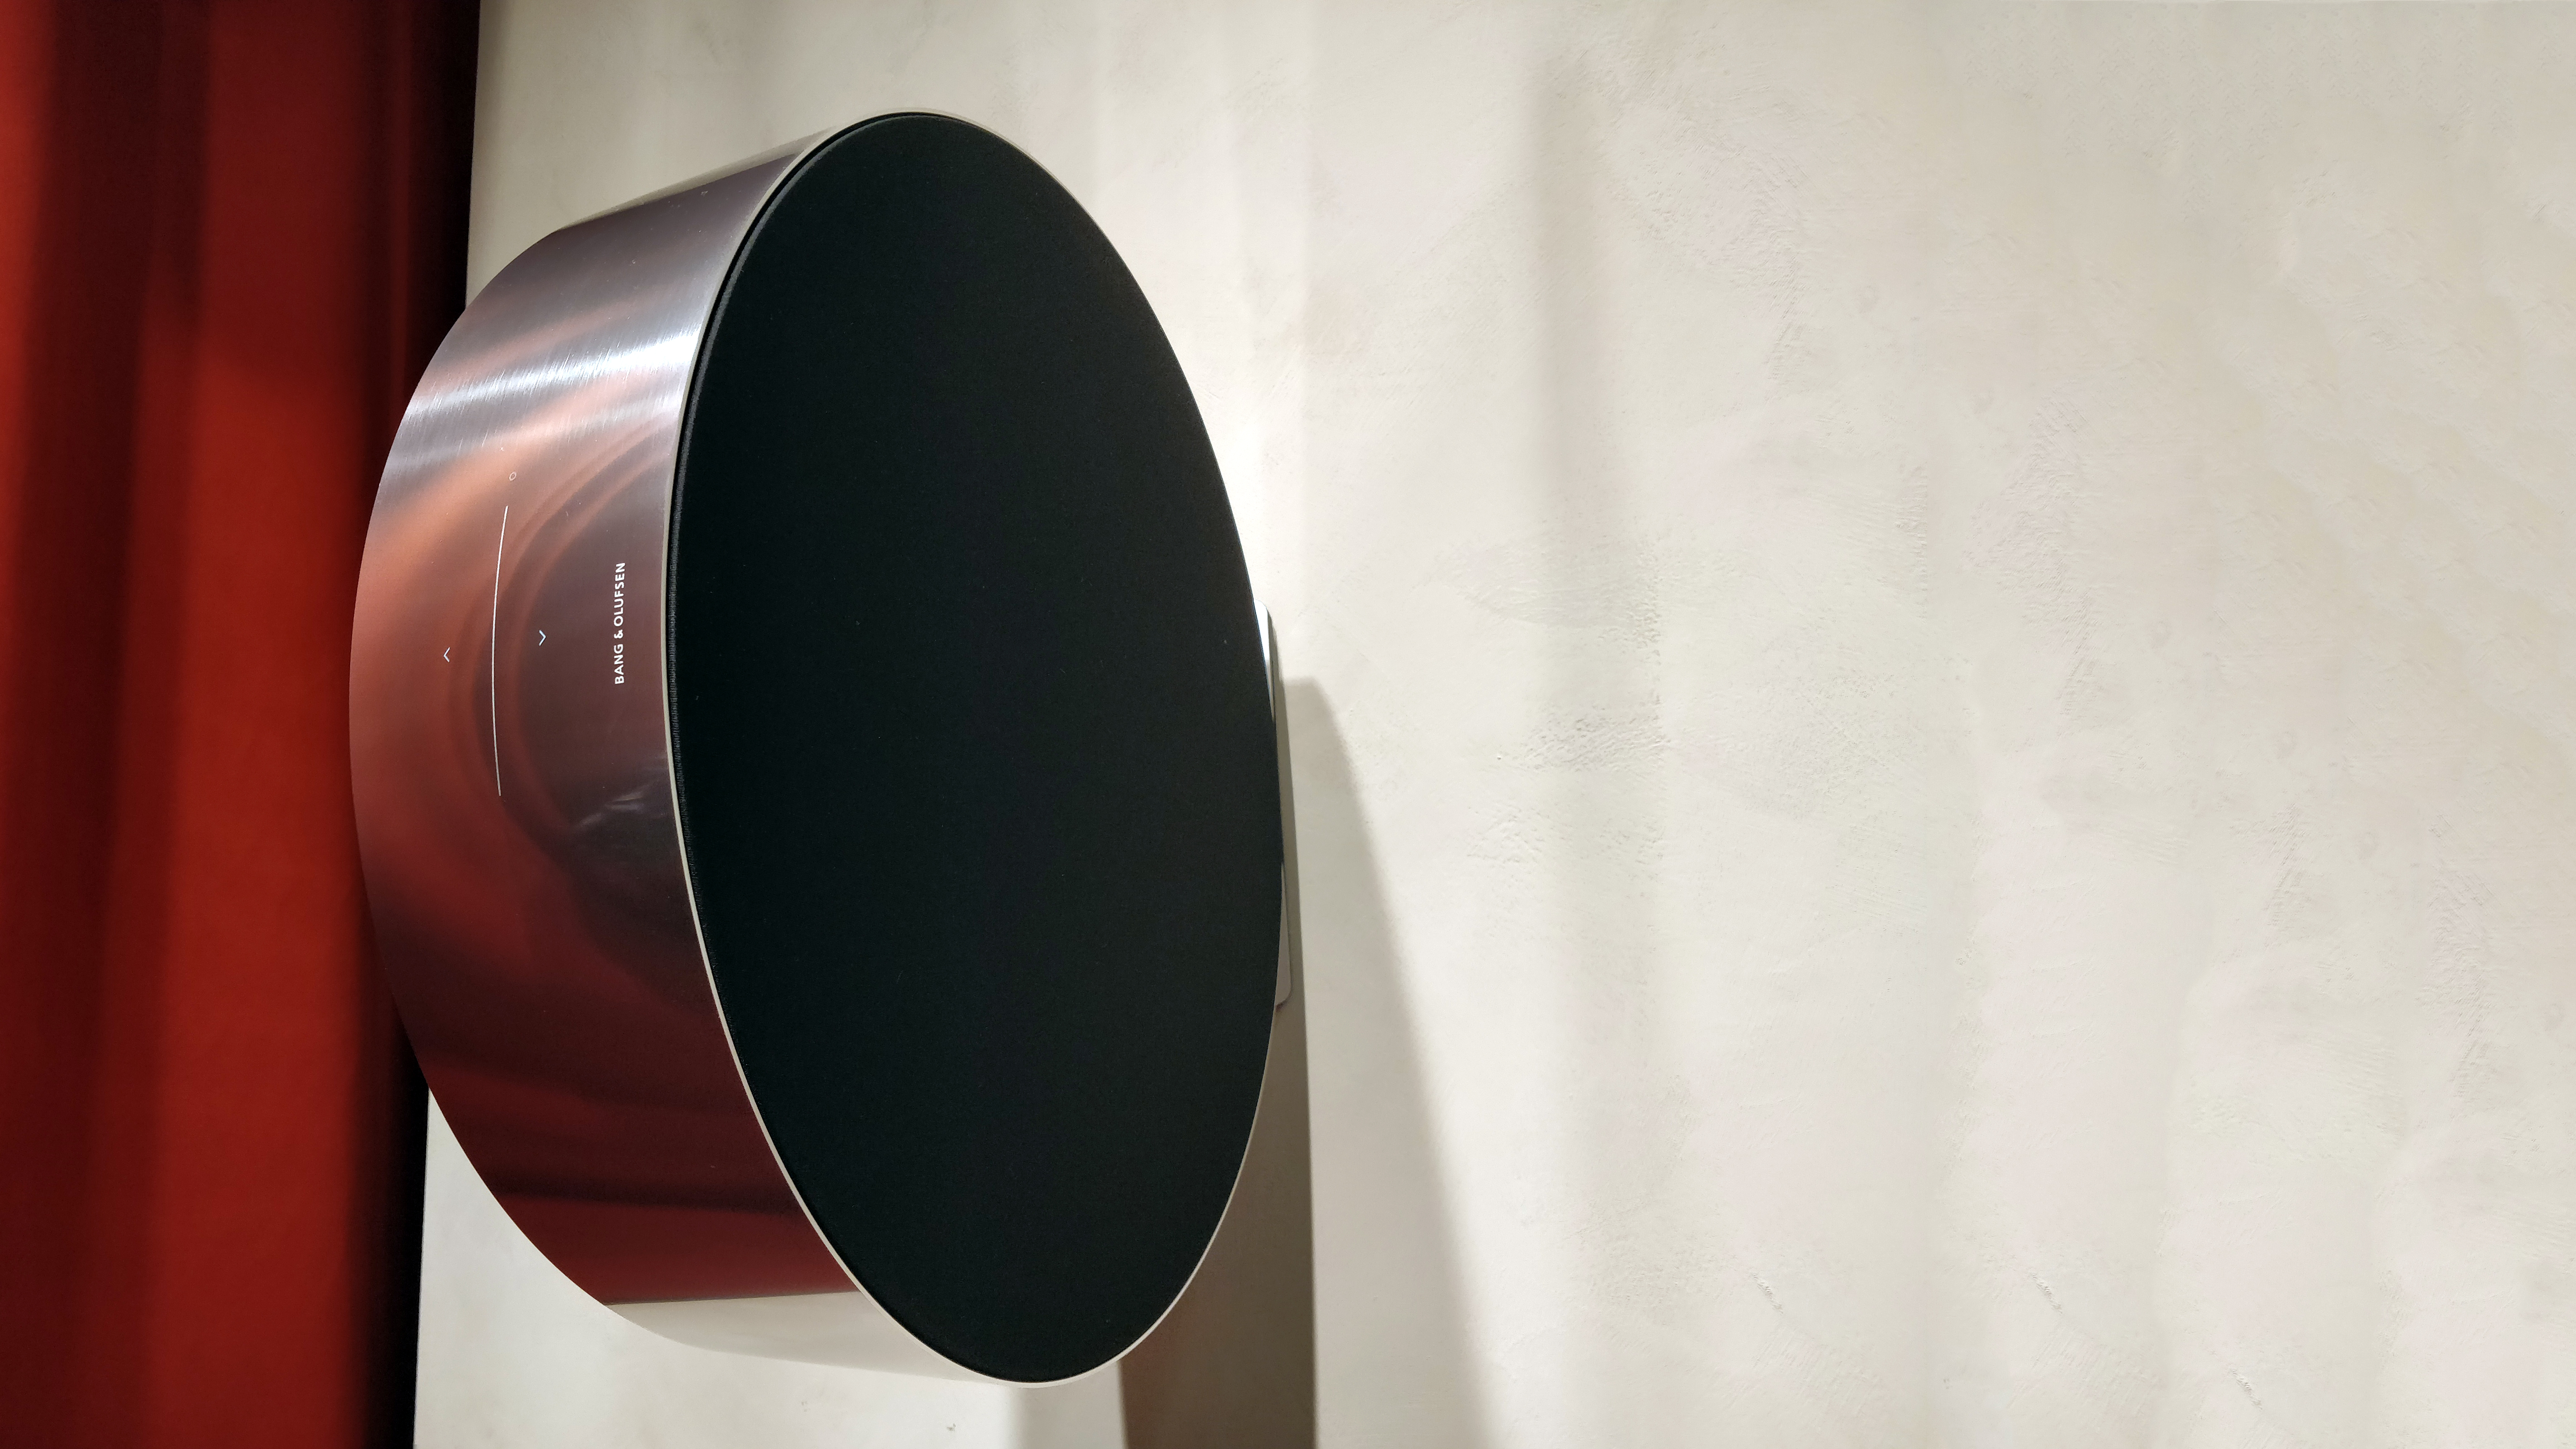 besteden Stijgen leerling Bang & Olufsen Edge wireless speaker hands-on review | What Hi-Fi?